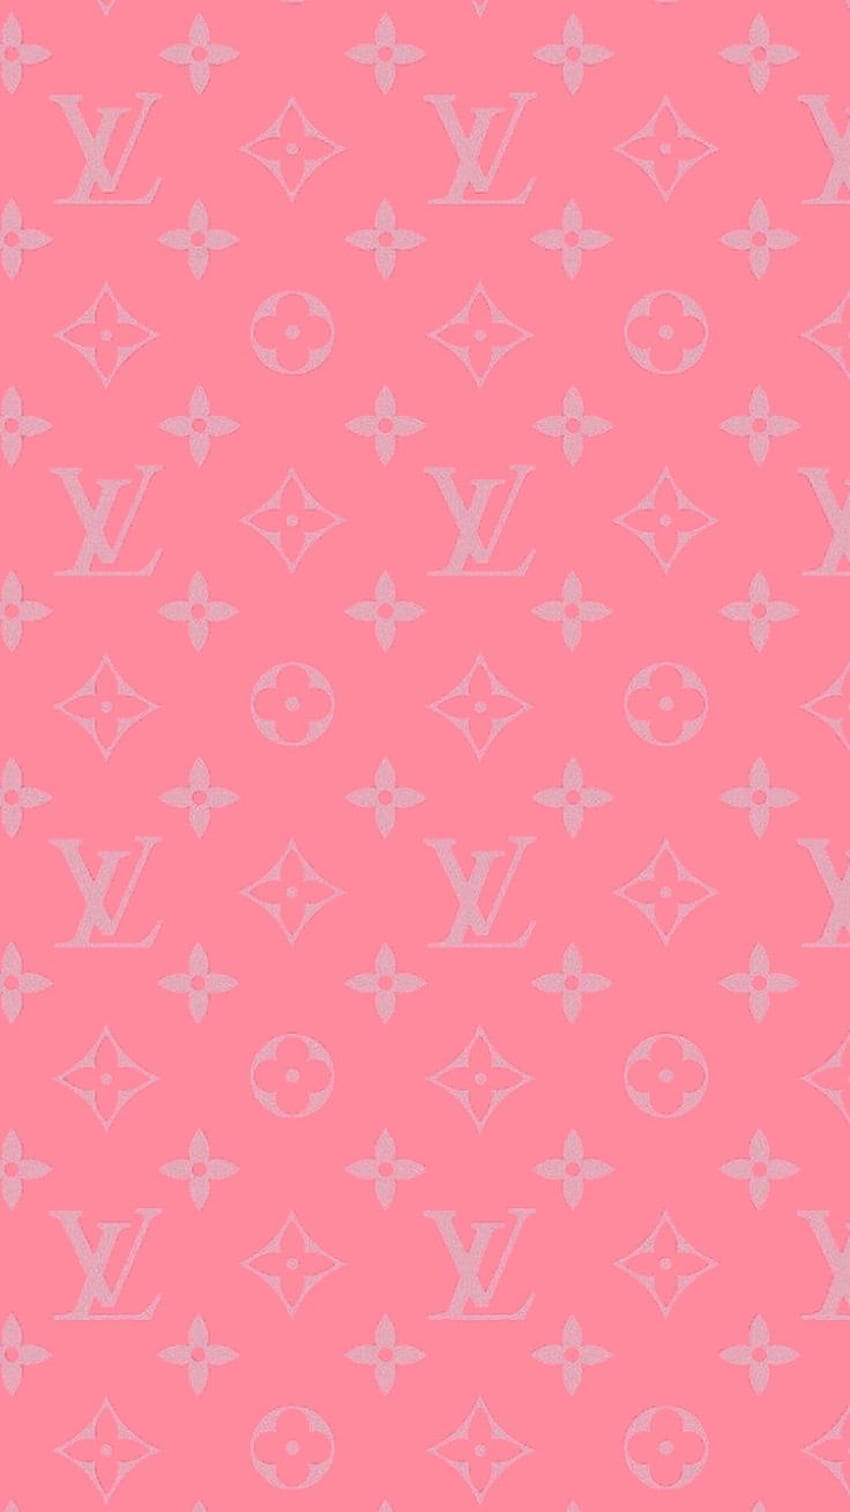 Louis Vuitton Wallpaper  Louis vuitton iphone wallpaper, Iphone wallpaper,  Pink wallpaper iphone